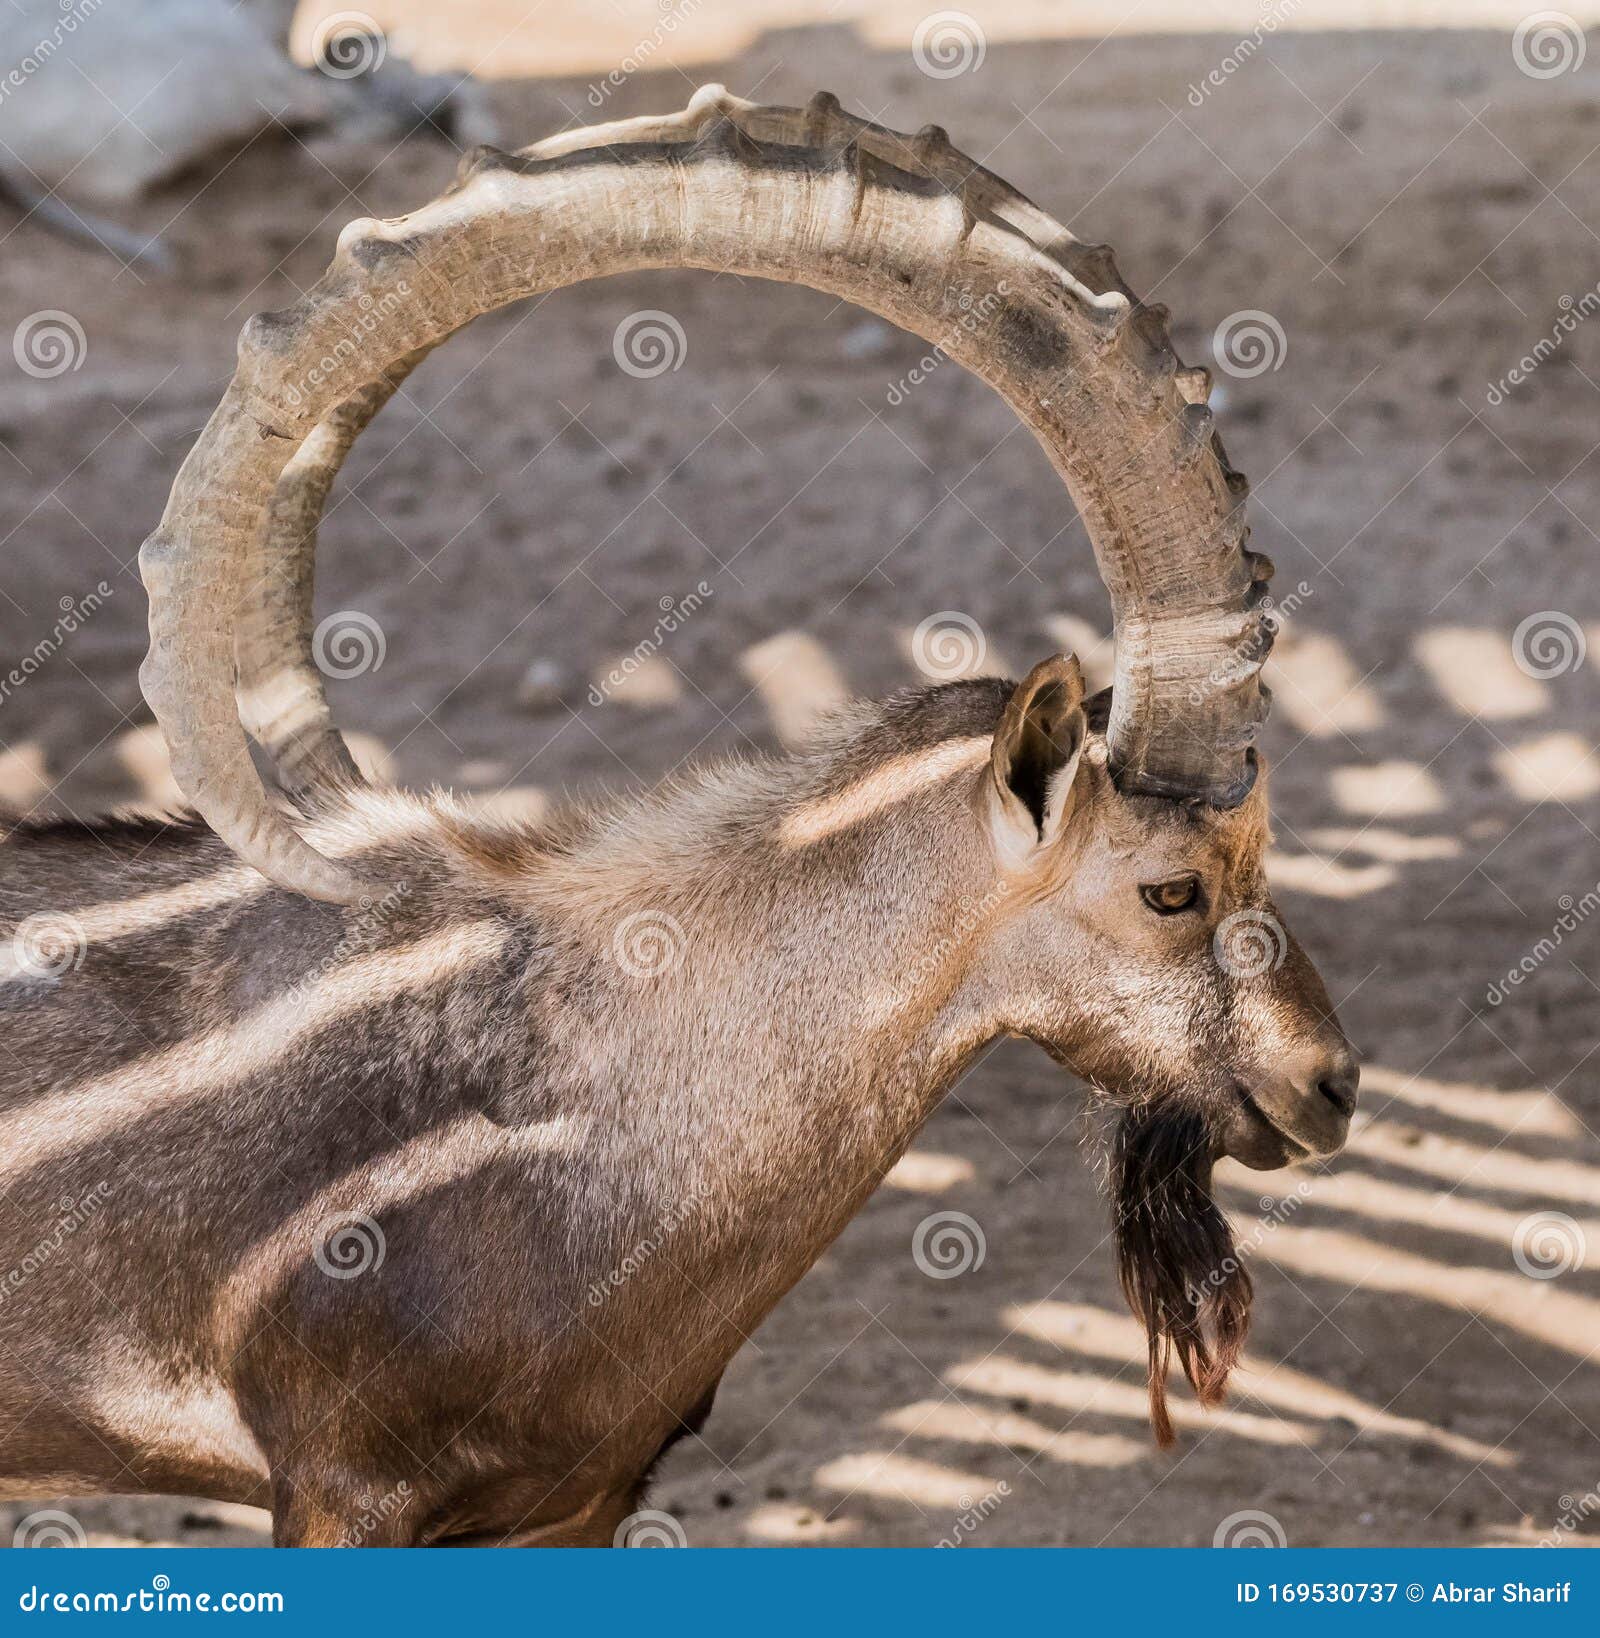 Wild Animal Nubian Ibex with Big Horns Stock Image - Image of deer,  wilderness: 169530737